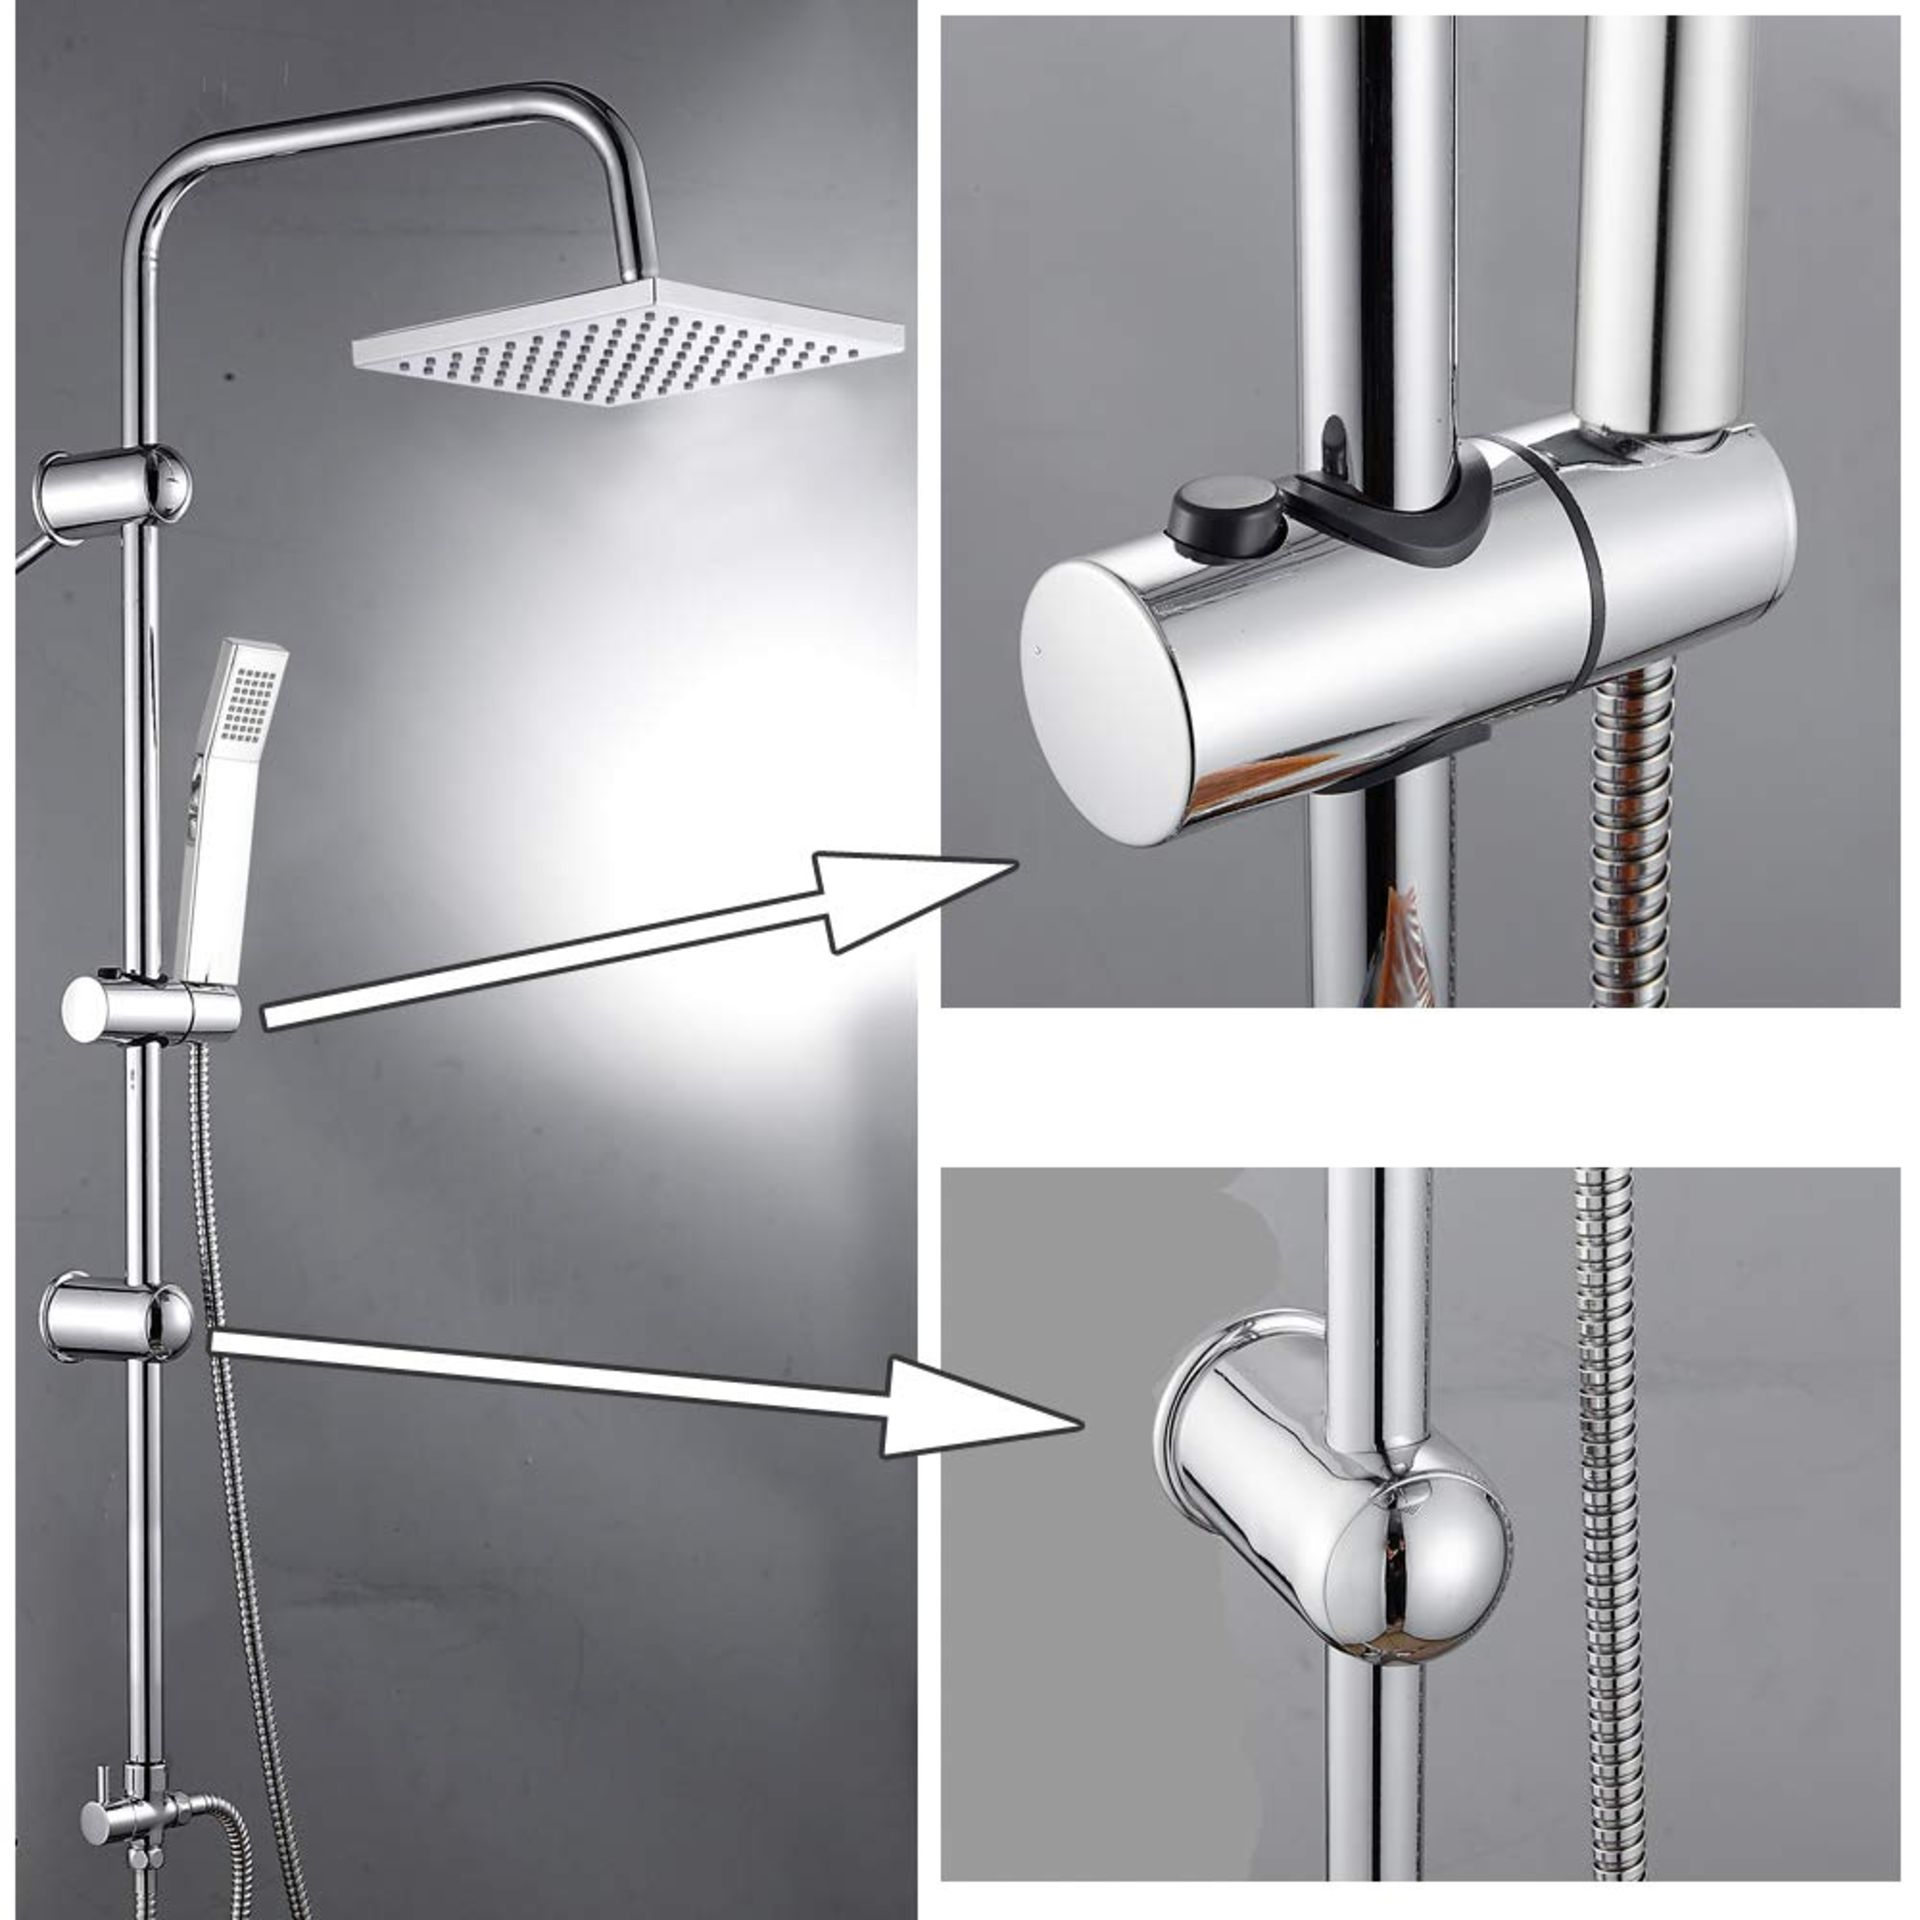 (XL120) Modern Chrome Riser Rail Mixer Square Shower Head Kit for Bathroom. Exceptional Build Q...( - Image 2 of 3